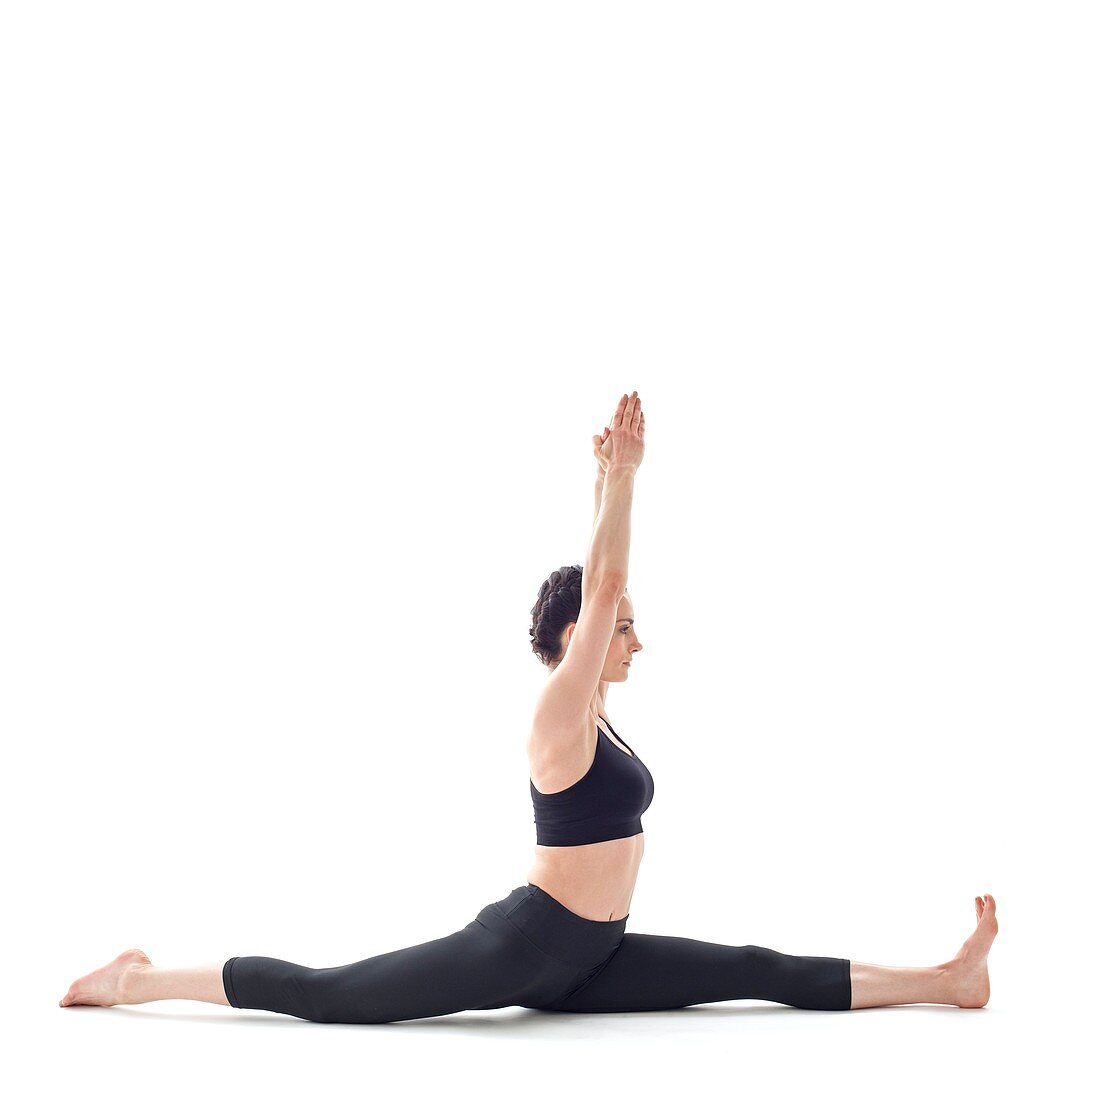 Woman doing the splits